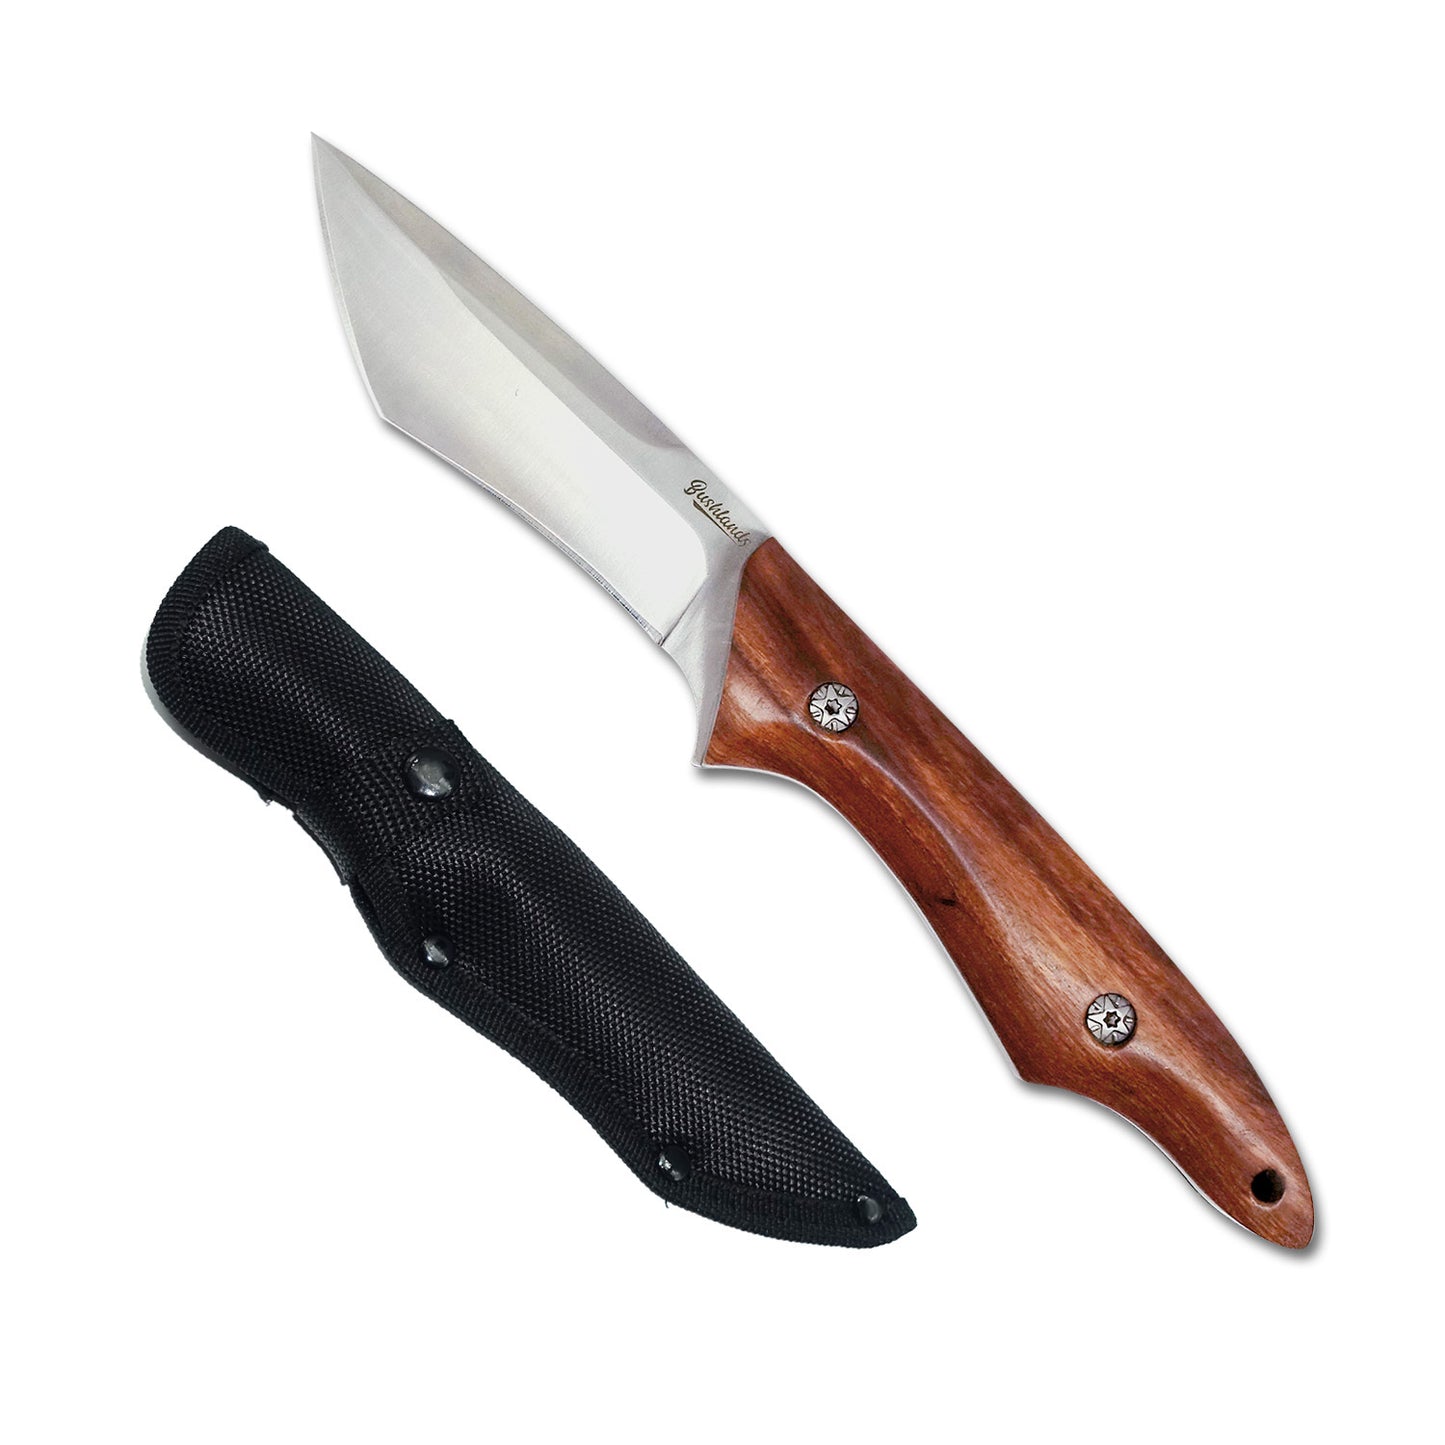 Bushlands Bushlands Hunting Tanto Knife 4 Inch Stainless Steel Blade - With Wenge Handle #1771 Saddle Brown